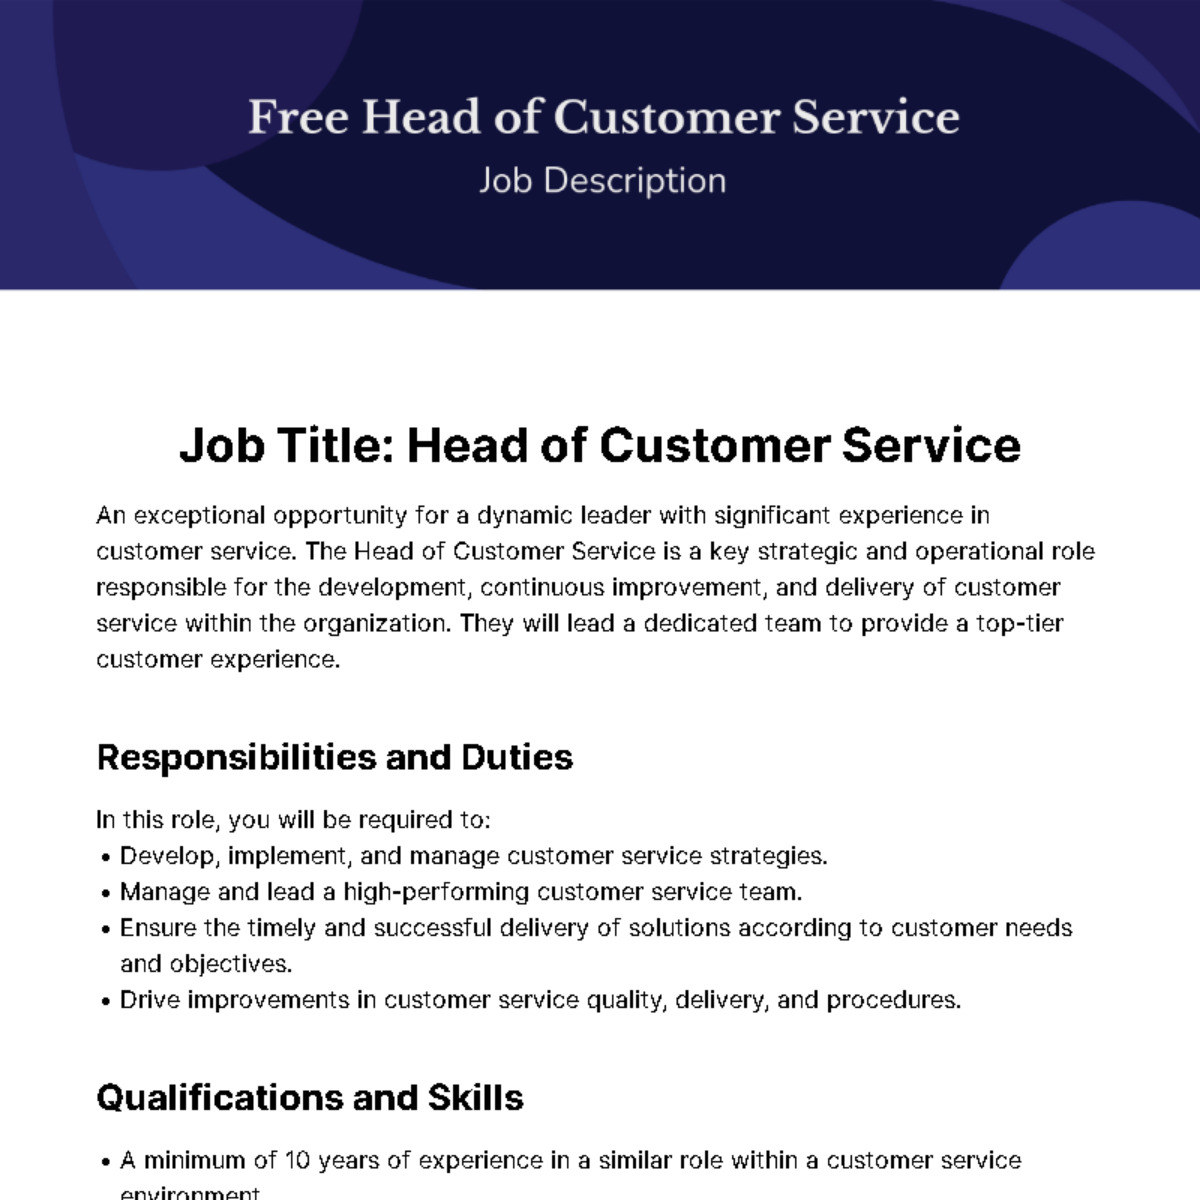 Head of Customer Service Job Description Template